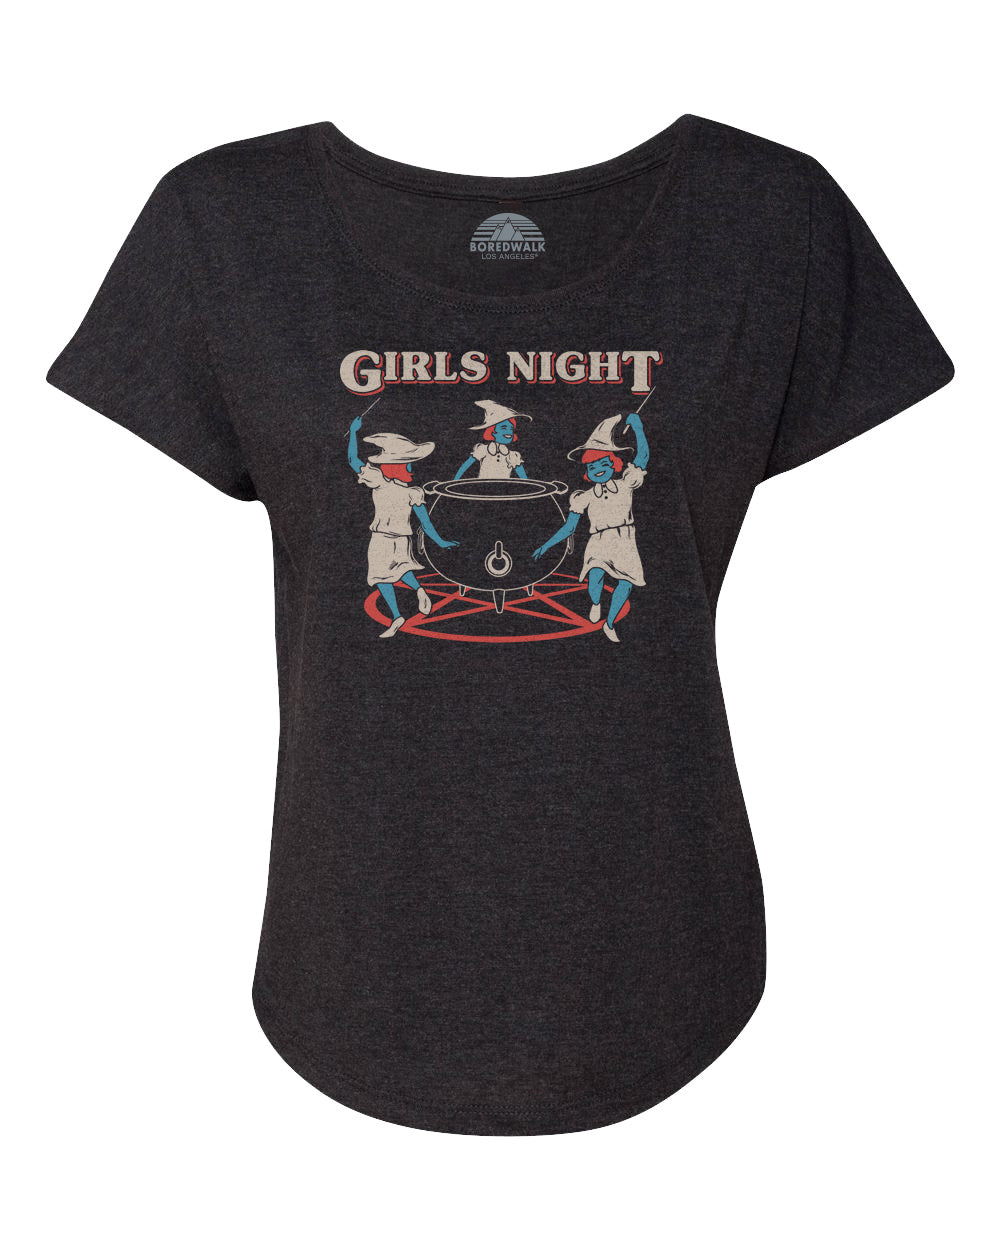 Women's Girls Night Witches Scoop Neck T-Shirt